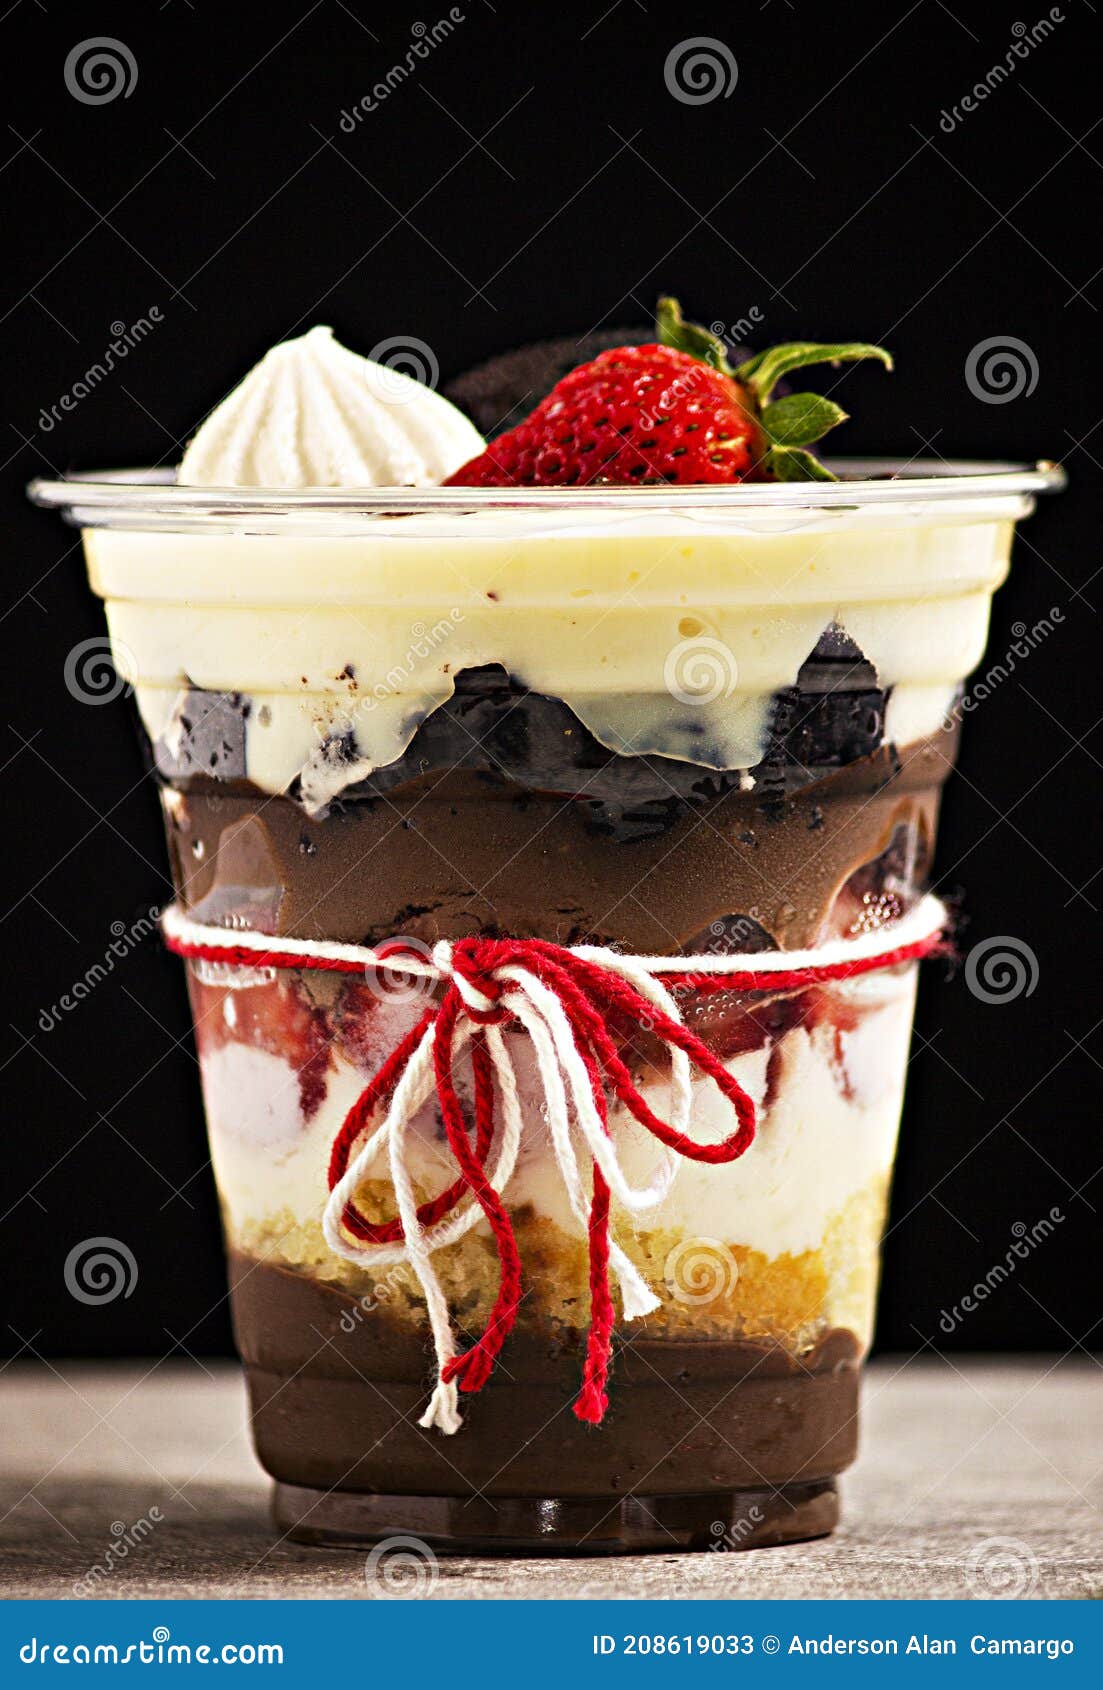 cake pot with strawberry and meringue on black background, brazilian copo da felicidade